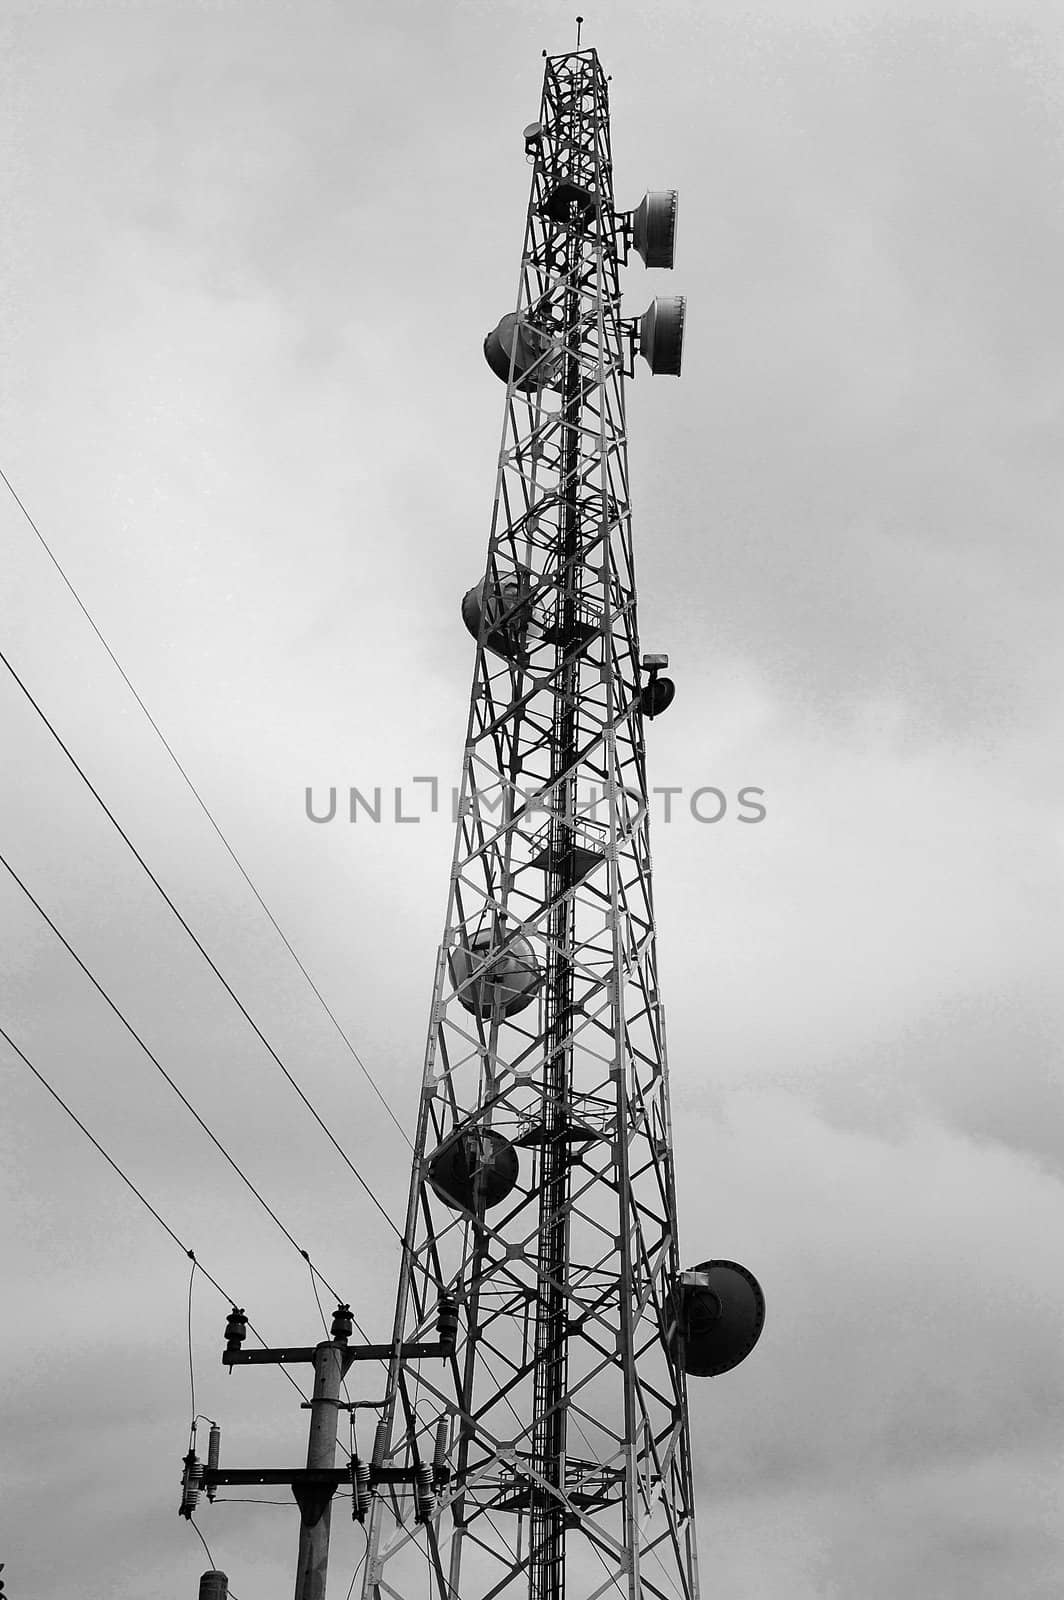 communication tower that vital for telecomunication traffic